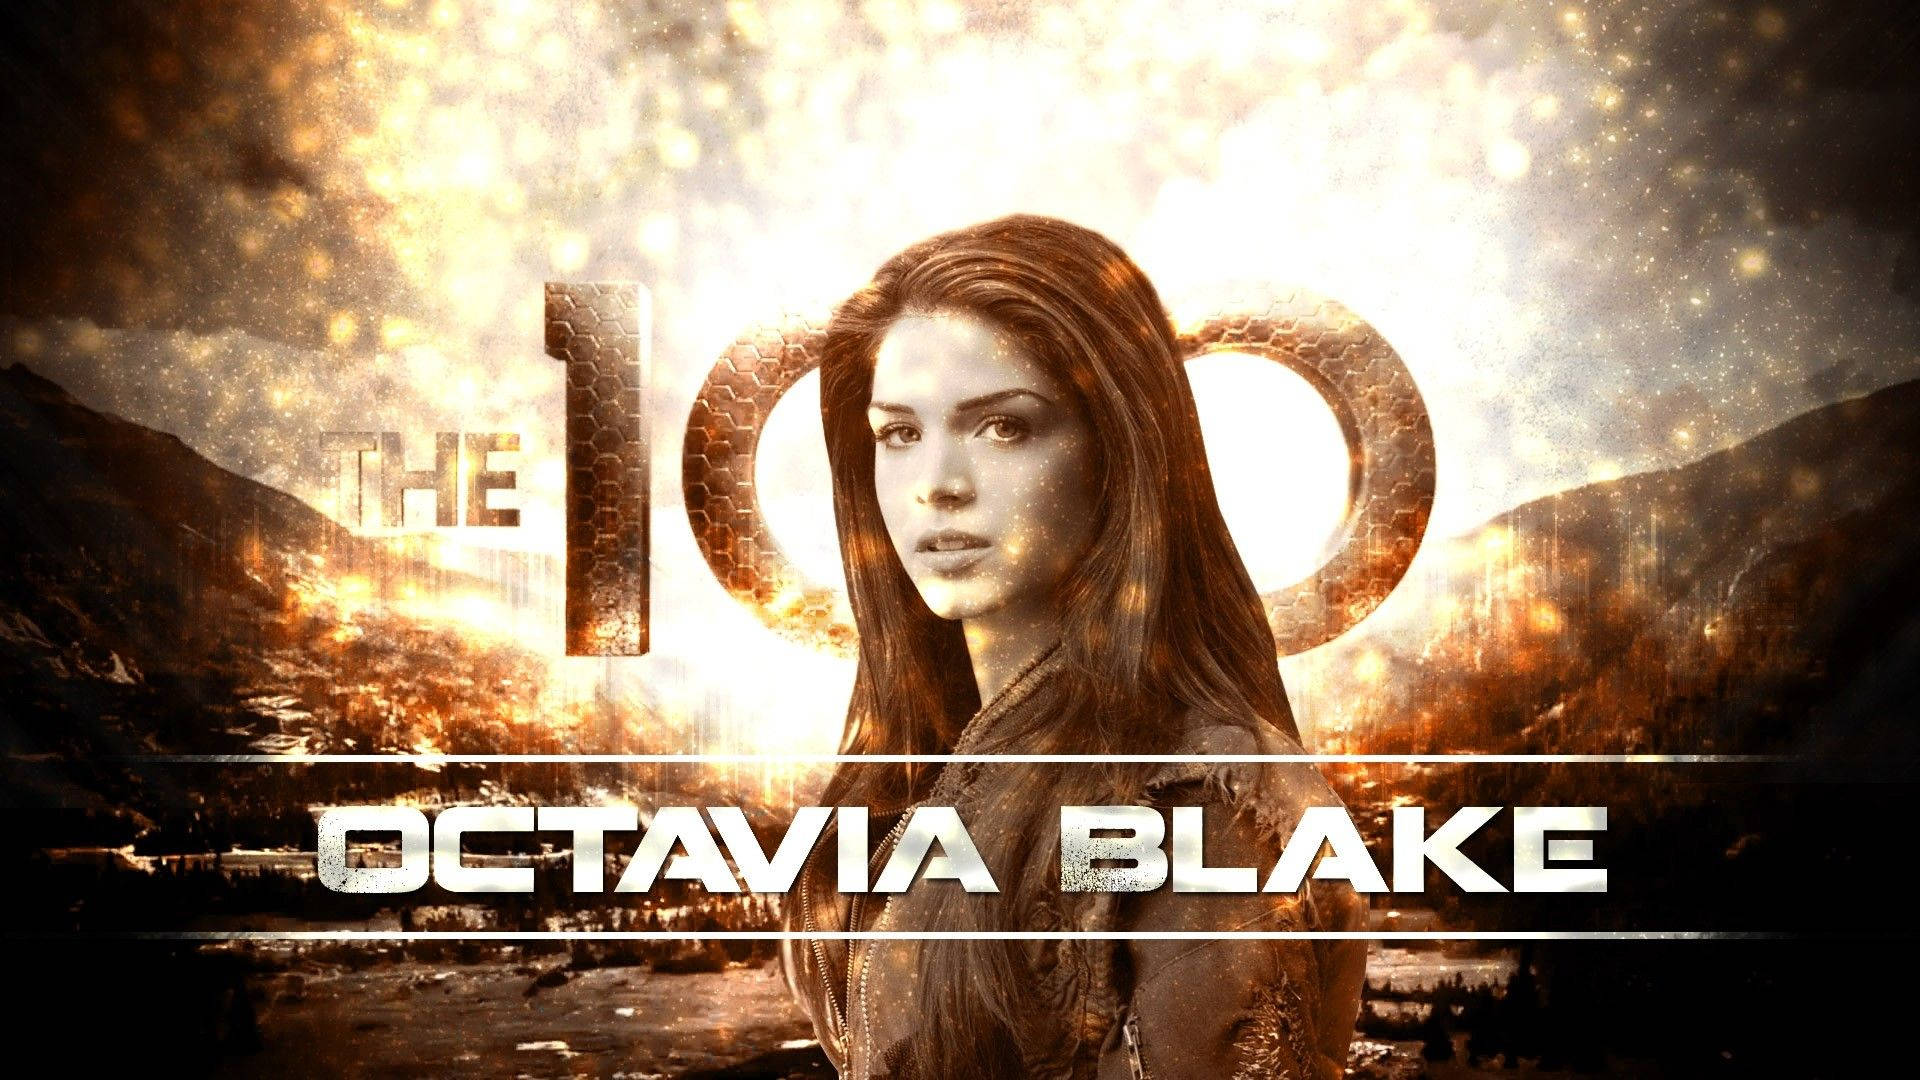 Caption: Octavia Blake - The Warrior of The 100 Wallpaper